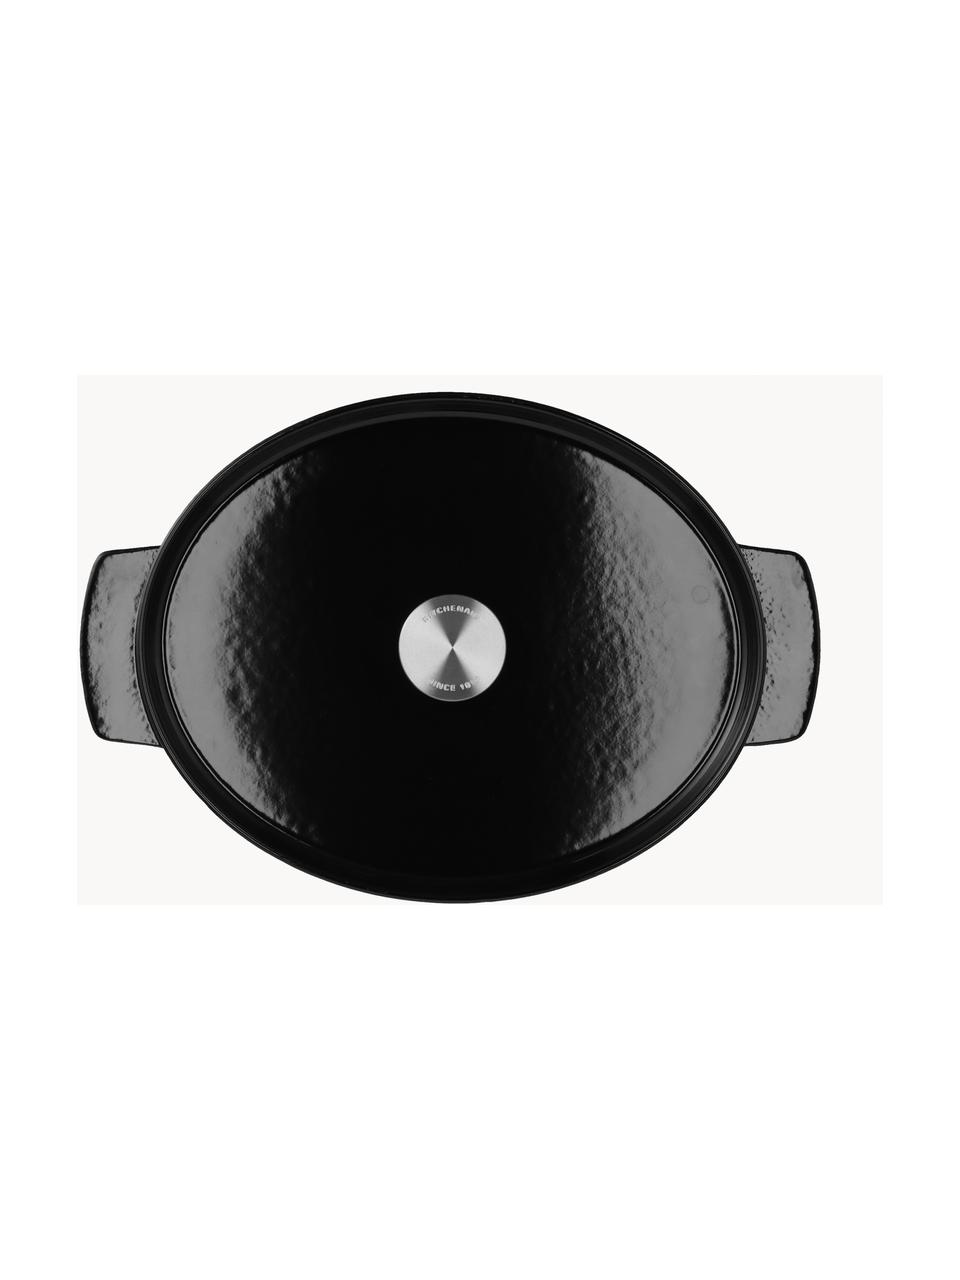 Cocotte ovale con rivestimento antiaderente Doelle, Ghisa con rivestimento antiaderente in ceramica, Nero, Lung. 40 x Larg. 29 x Alt. 16 cm